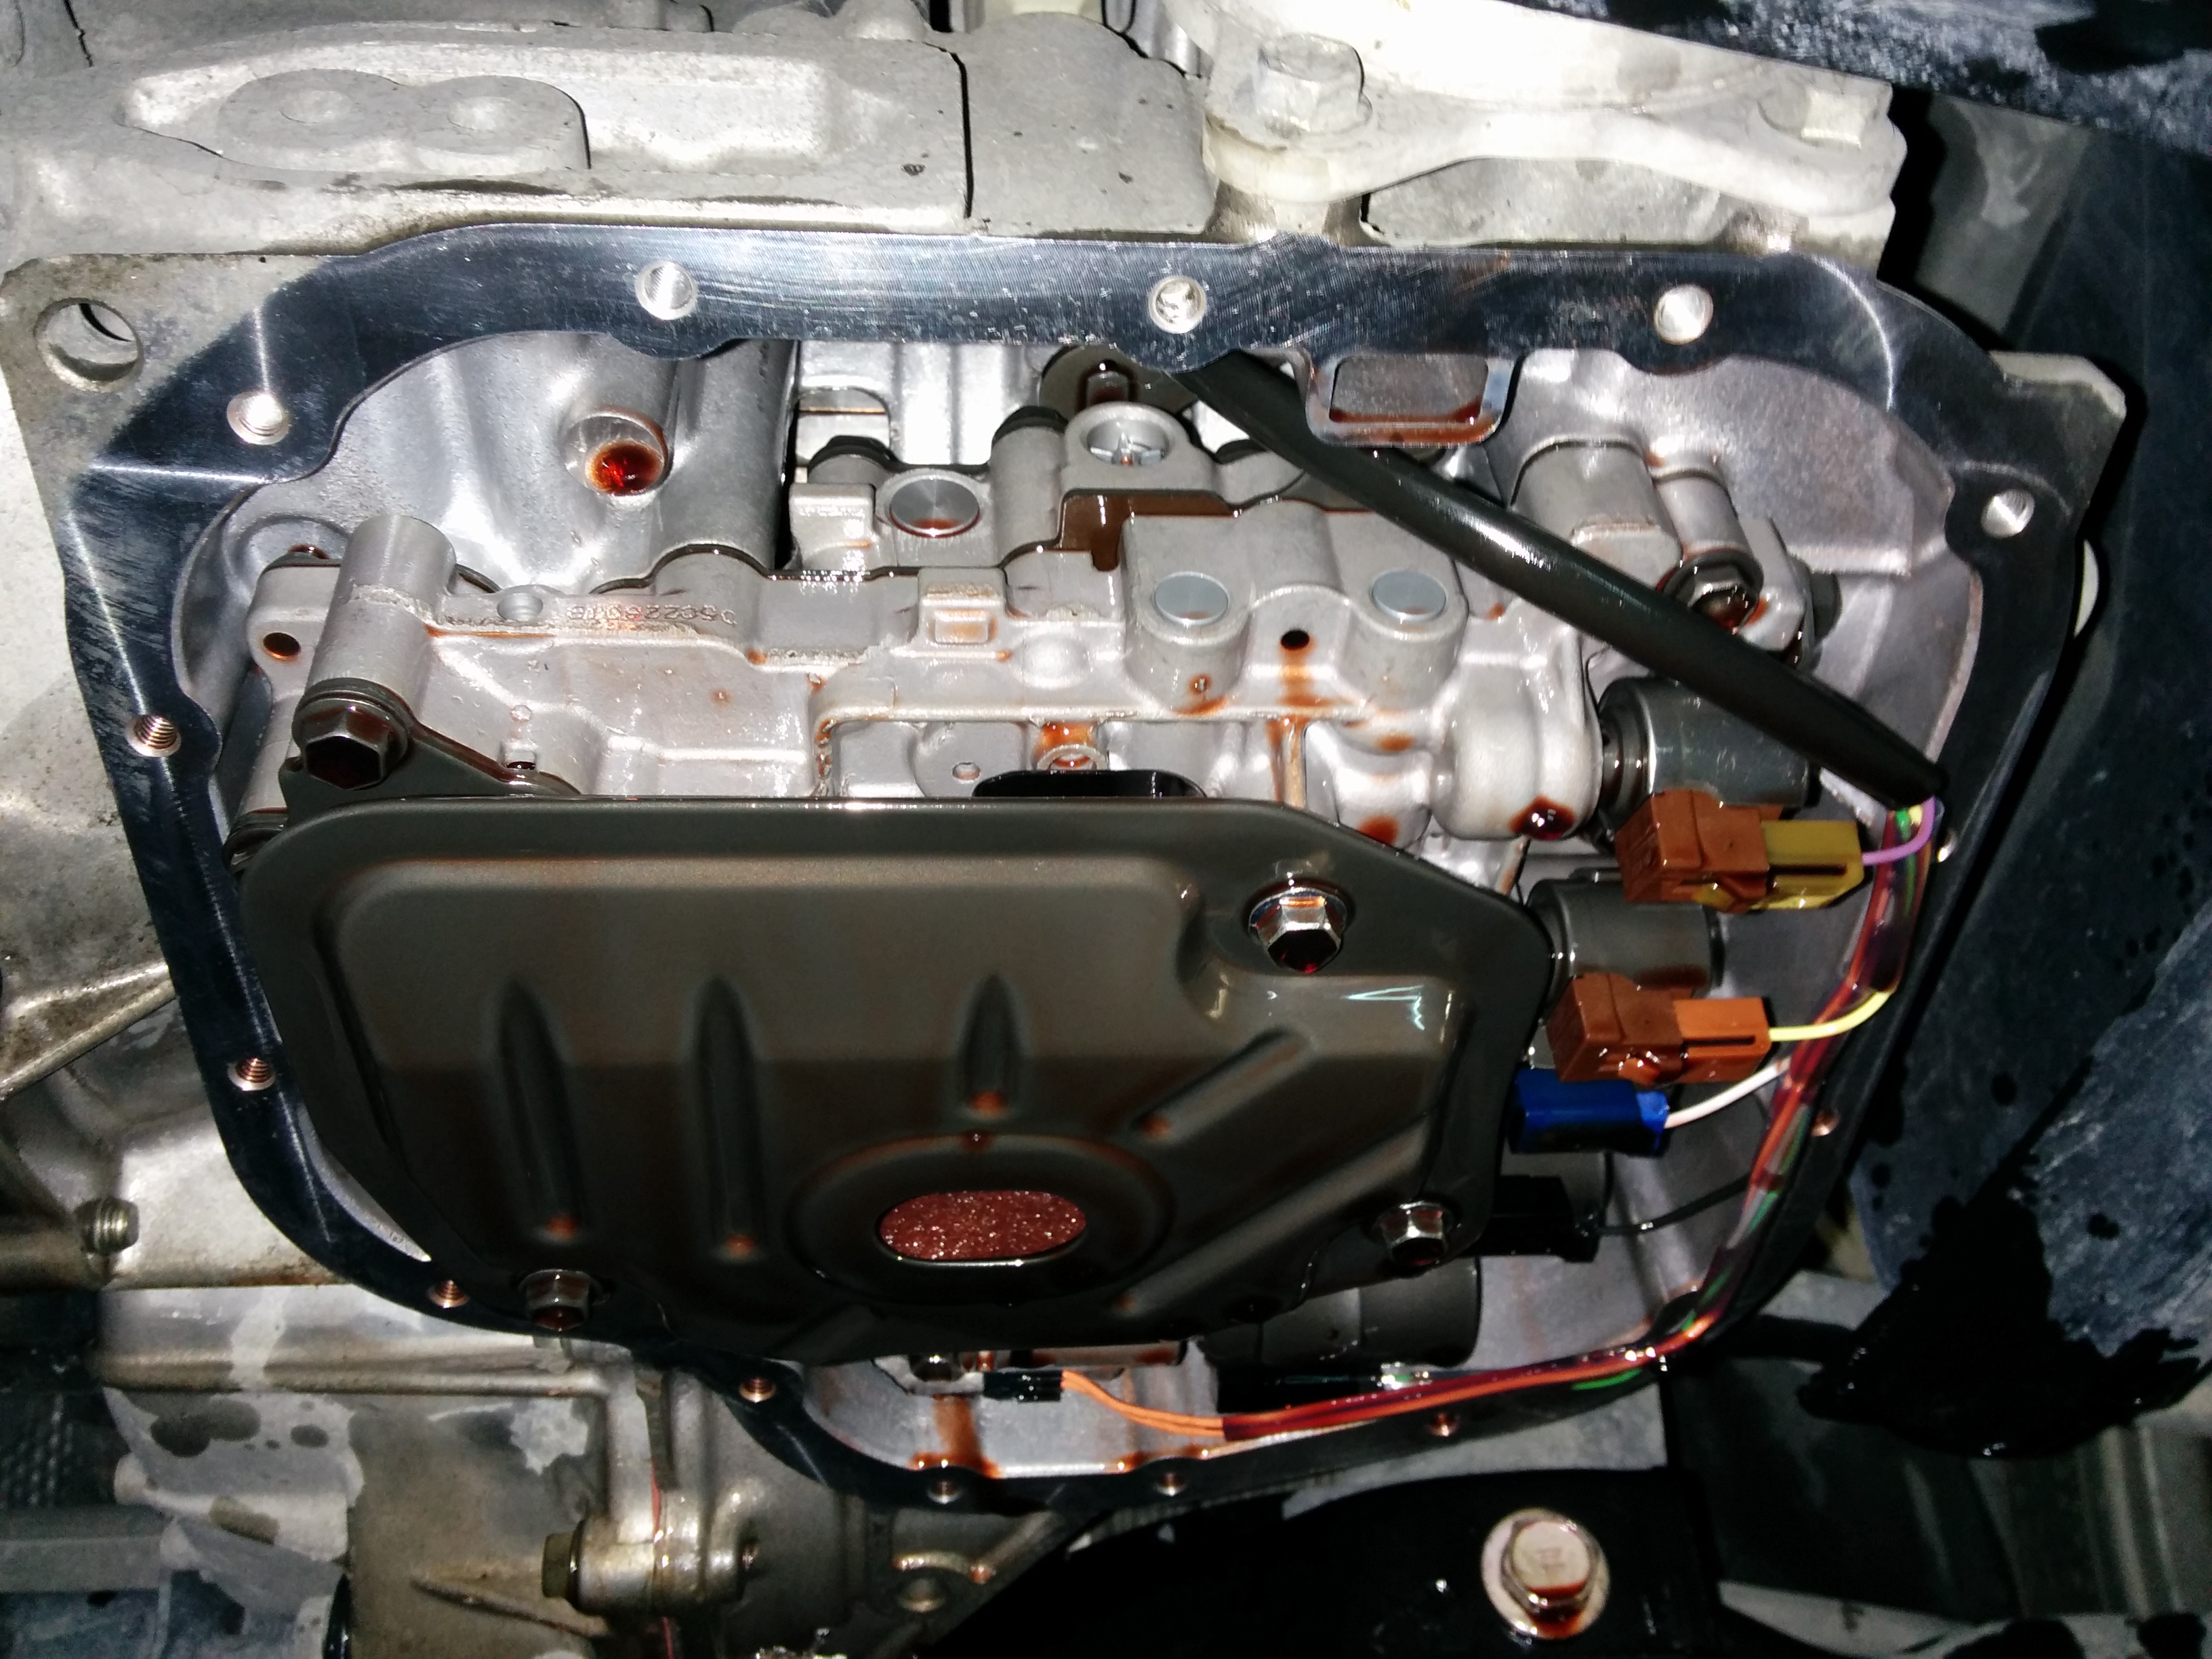 Тойота Виш вариатор. K410 фильтр. Замена масла в вариаторе чери м11. Замена масла трансмиссионного Toyota Vitz (2009.